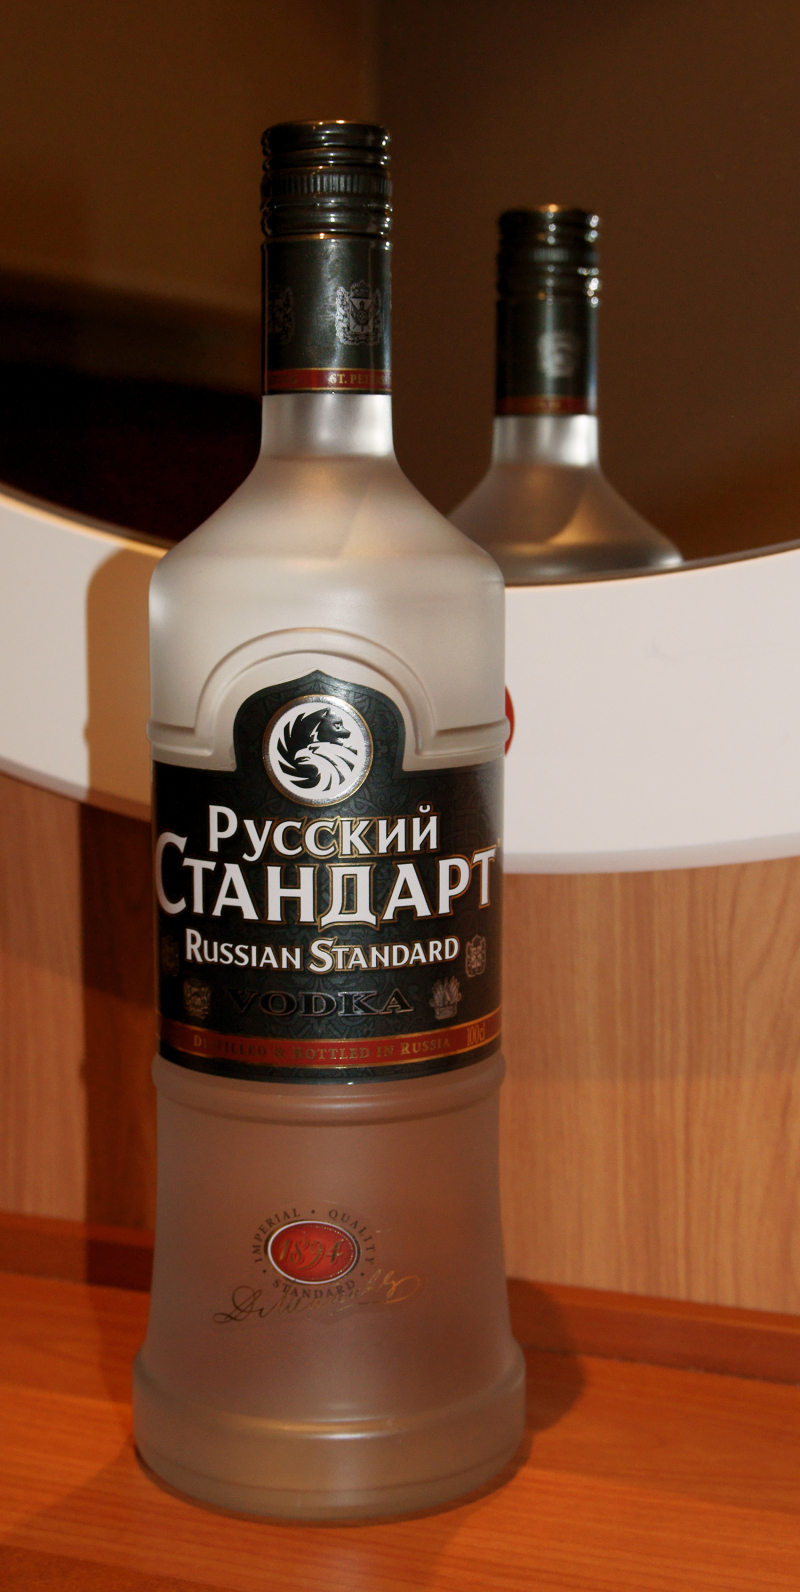 Photo by kallerna on Wikimedia Commons  (https://commons.wikimedia.org/wiki/File:Russian_Standard_Vodka.jpg)